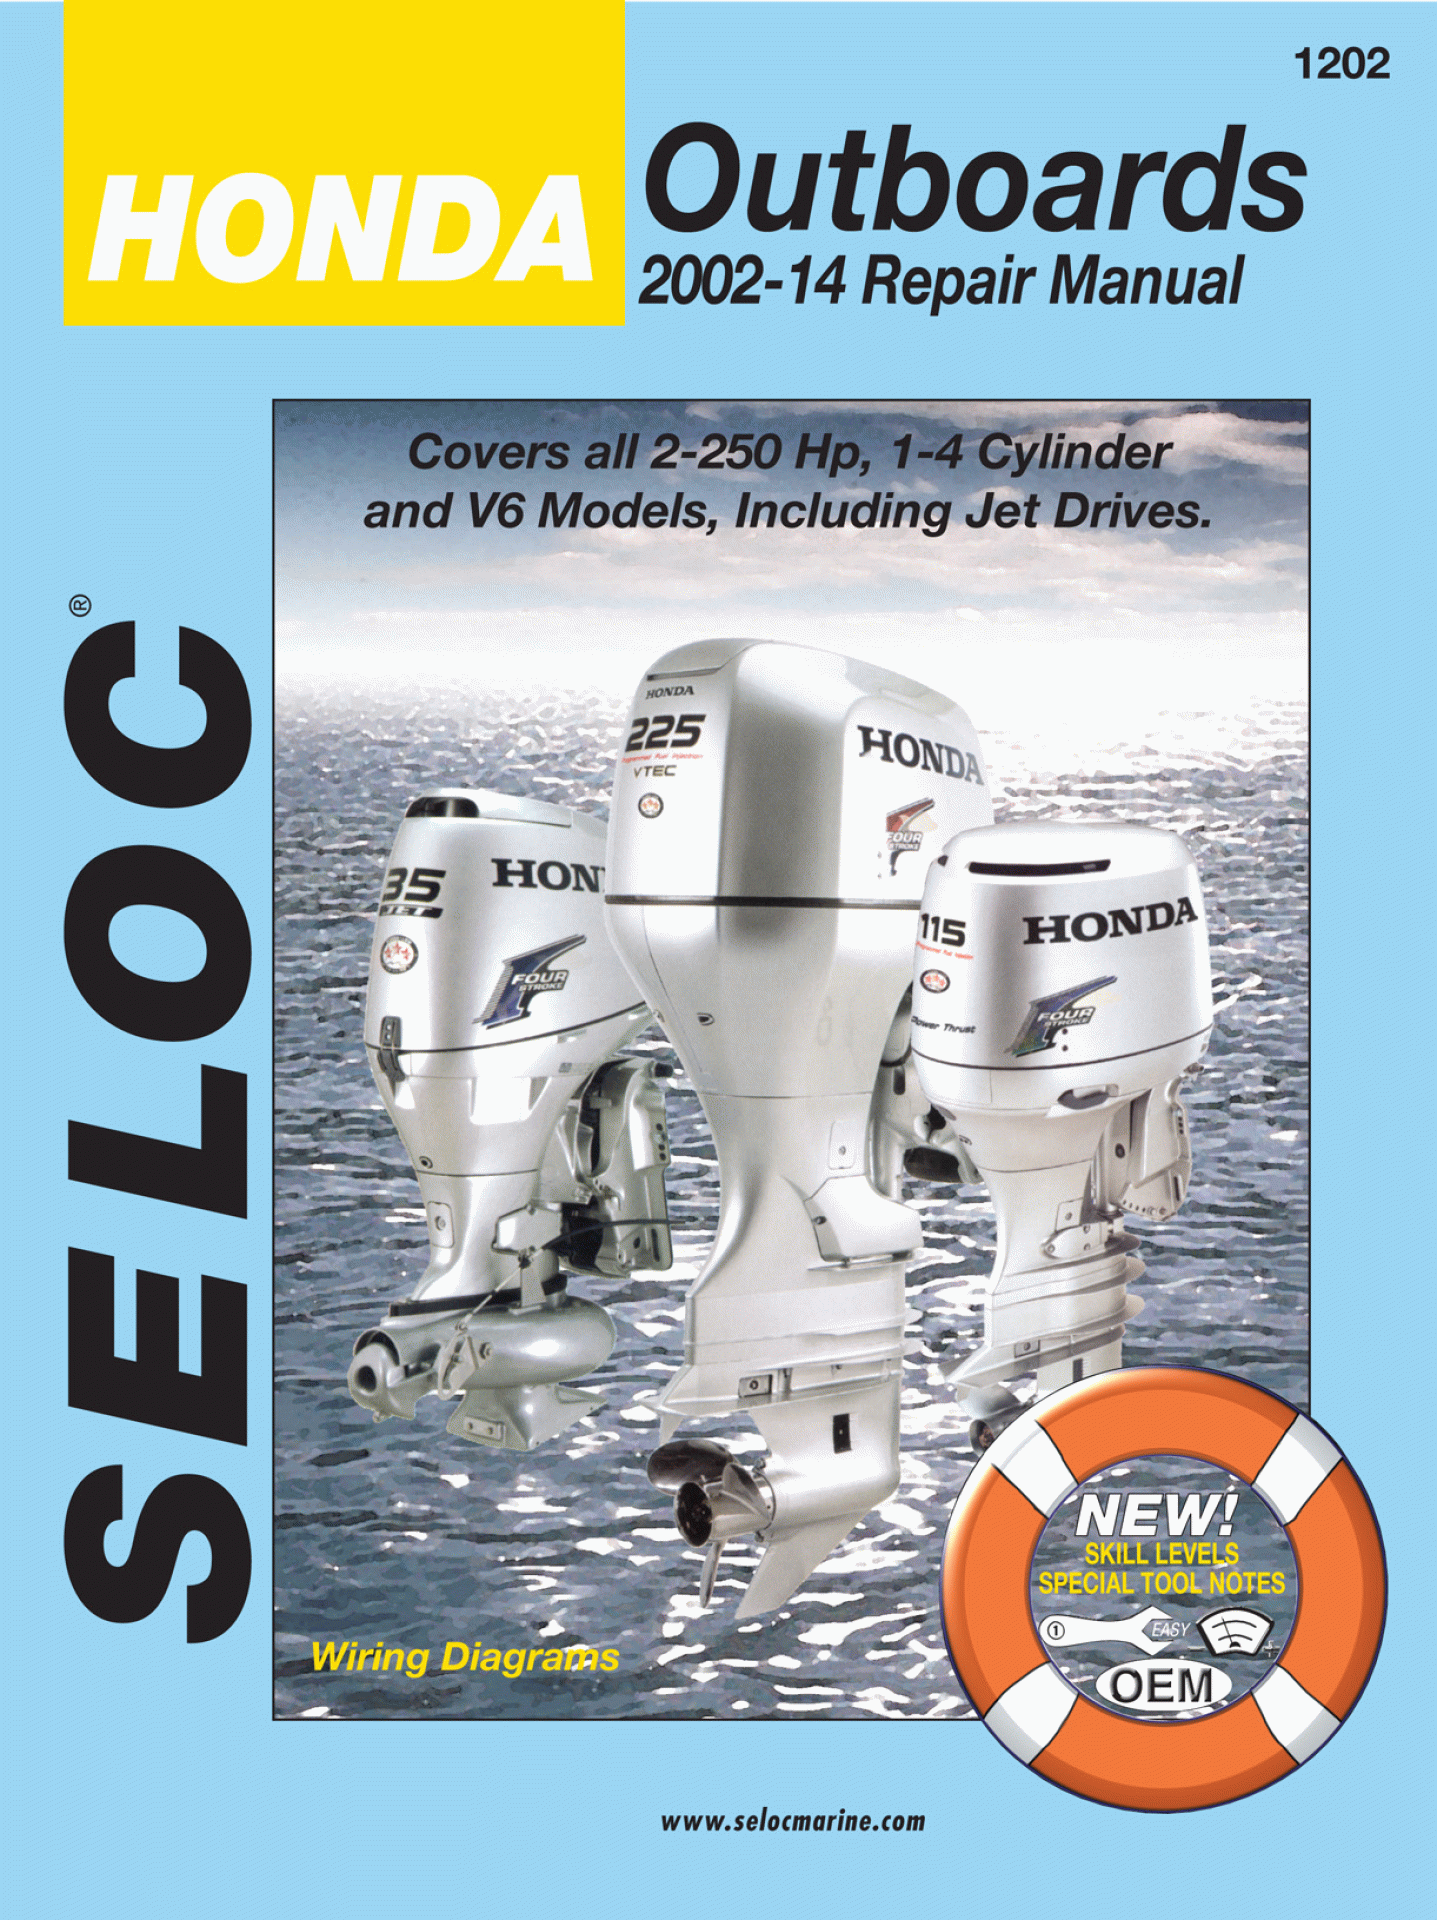 SELOC PUBLISHING | 18-01202 | REPAIR MANUAL Honda Outboards All Engines 2002-14